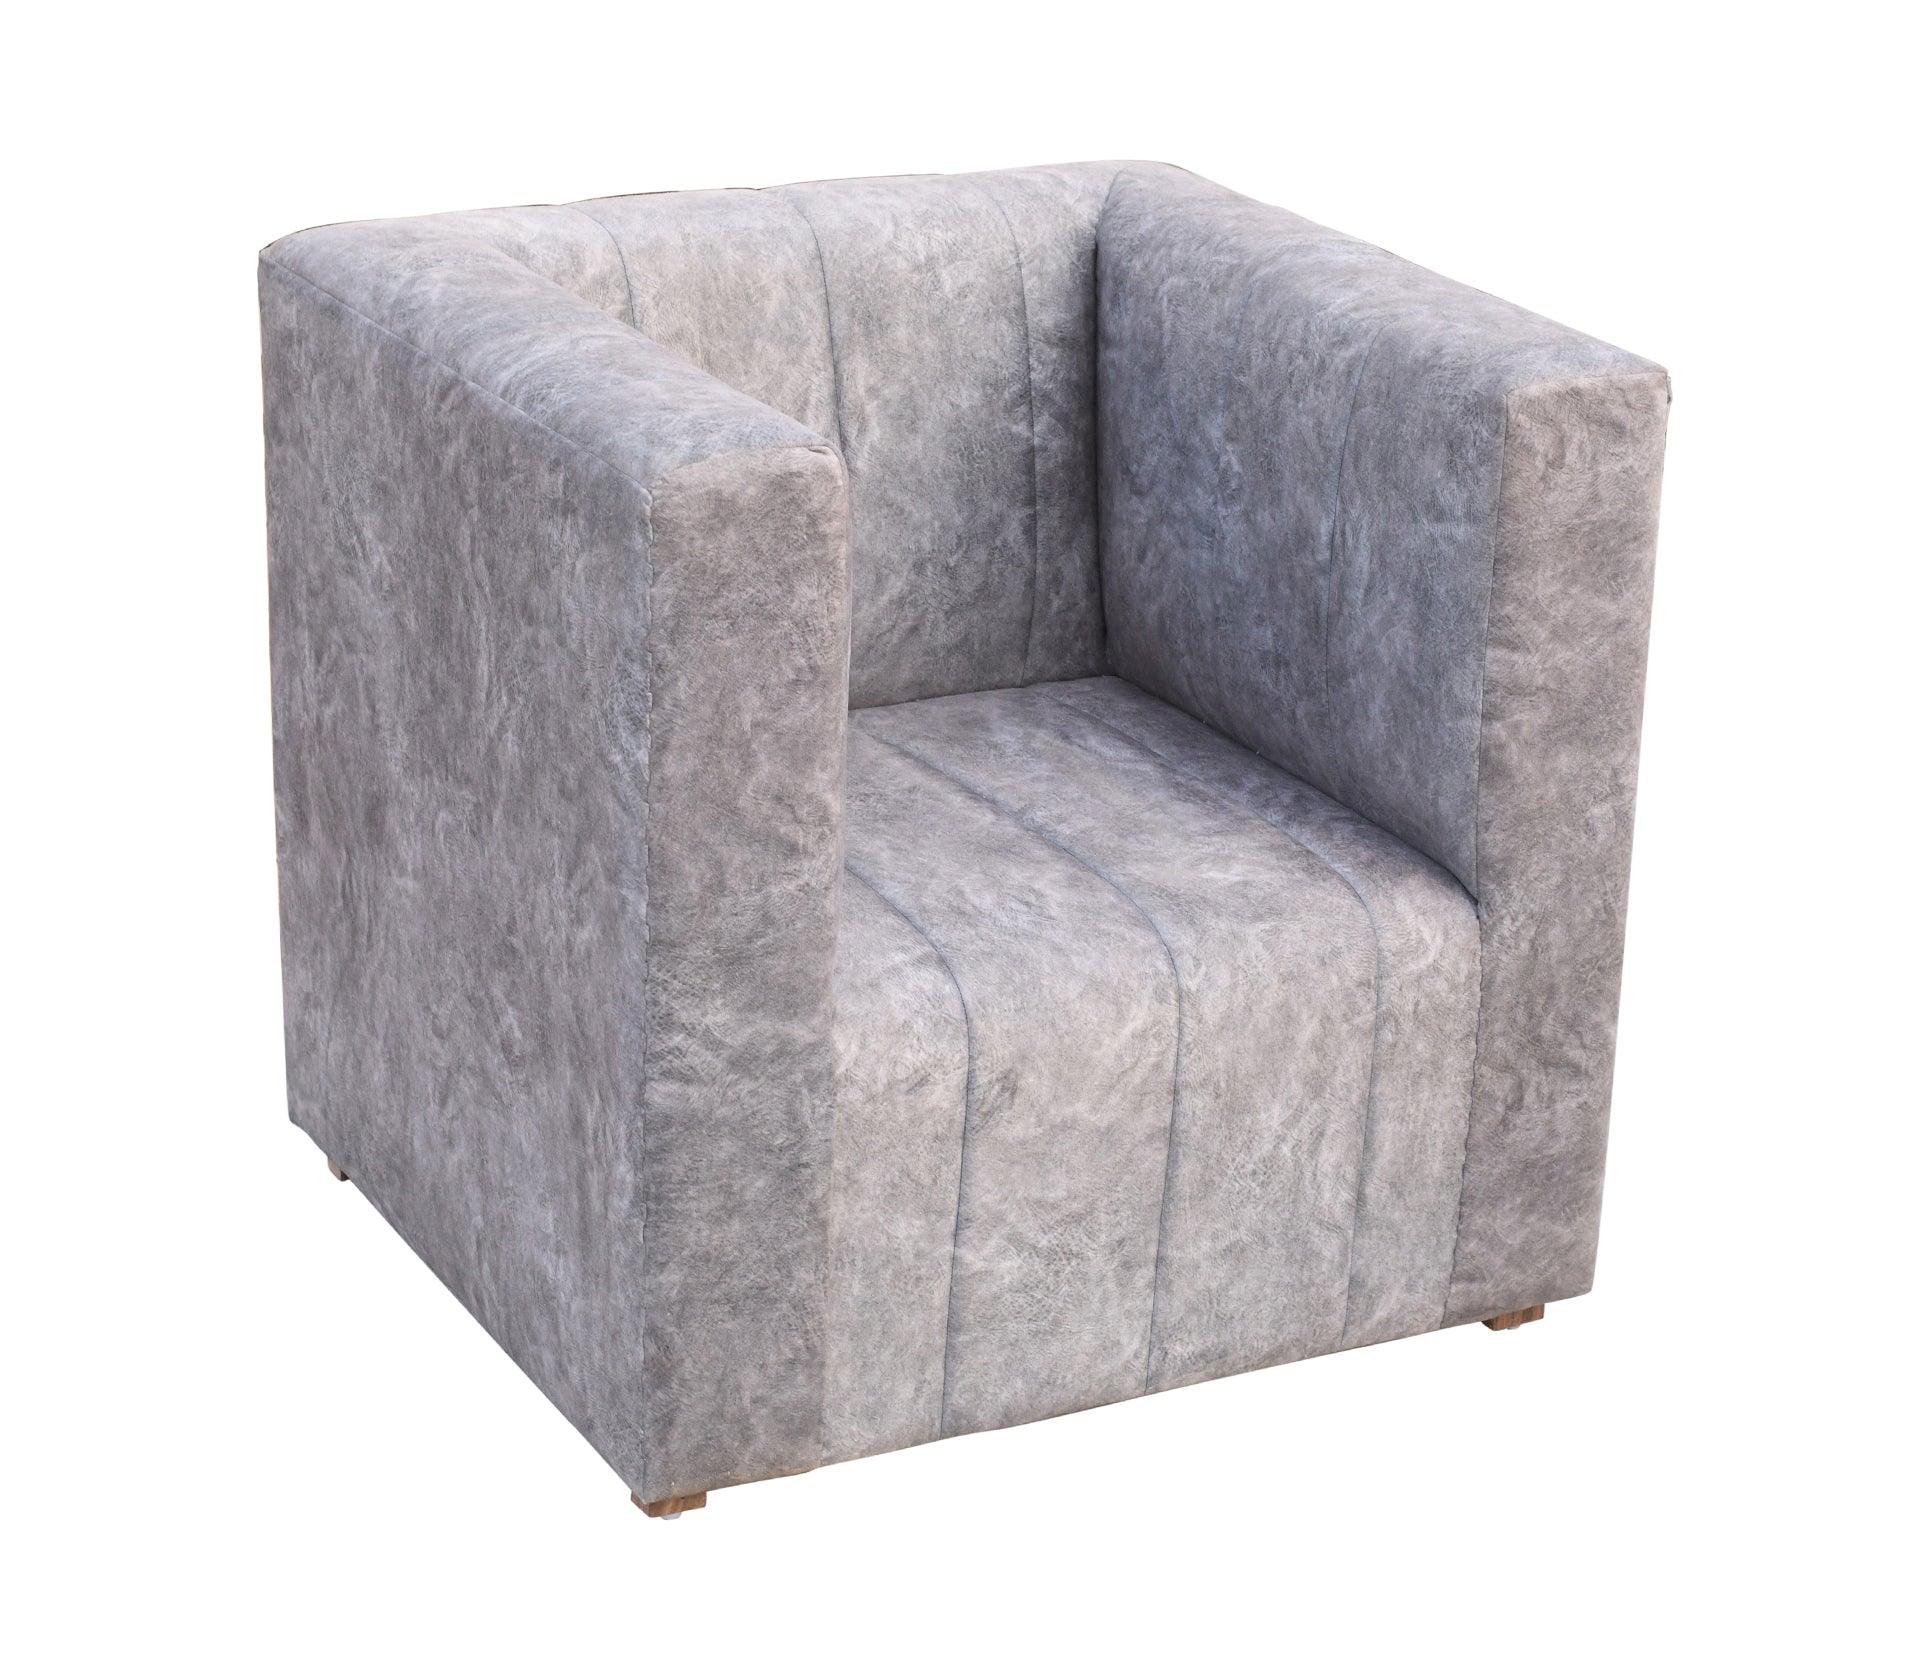 Juliat Grey Sofa Set 3+1+1 With Golden Legs - Furniture Castle